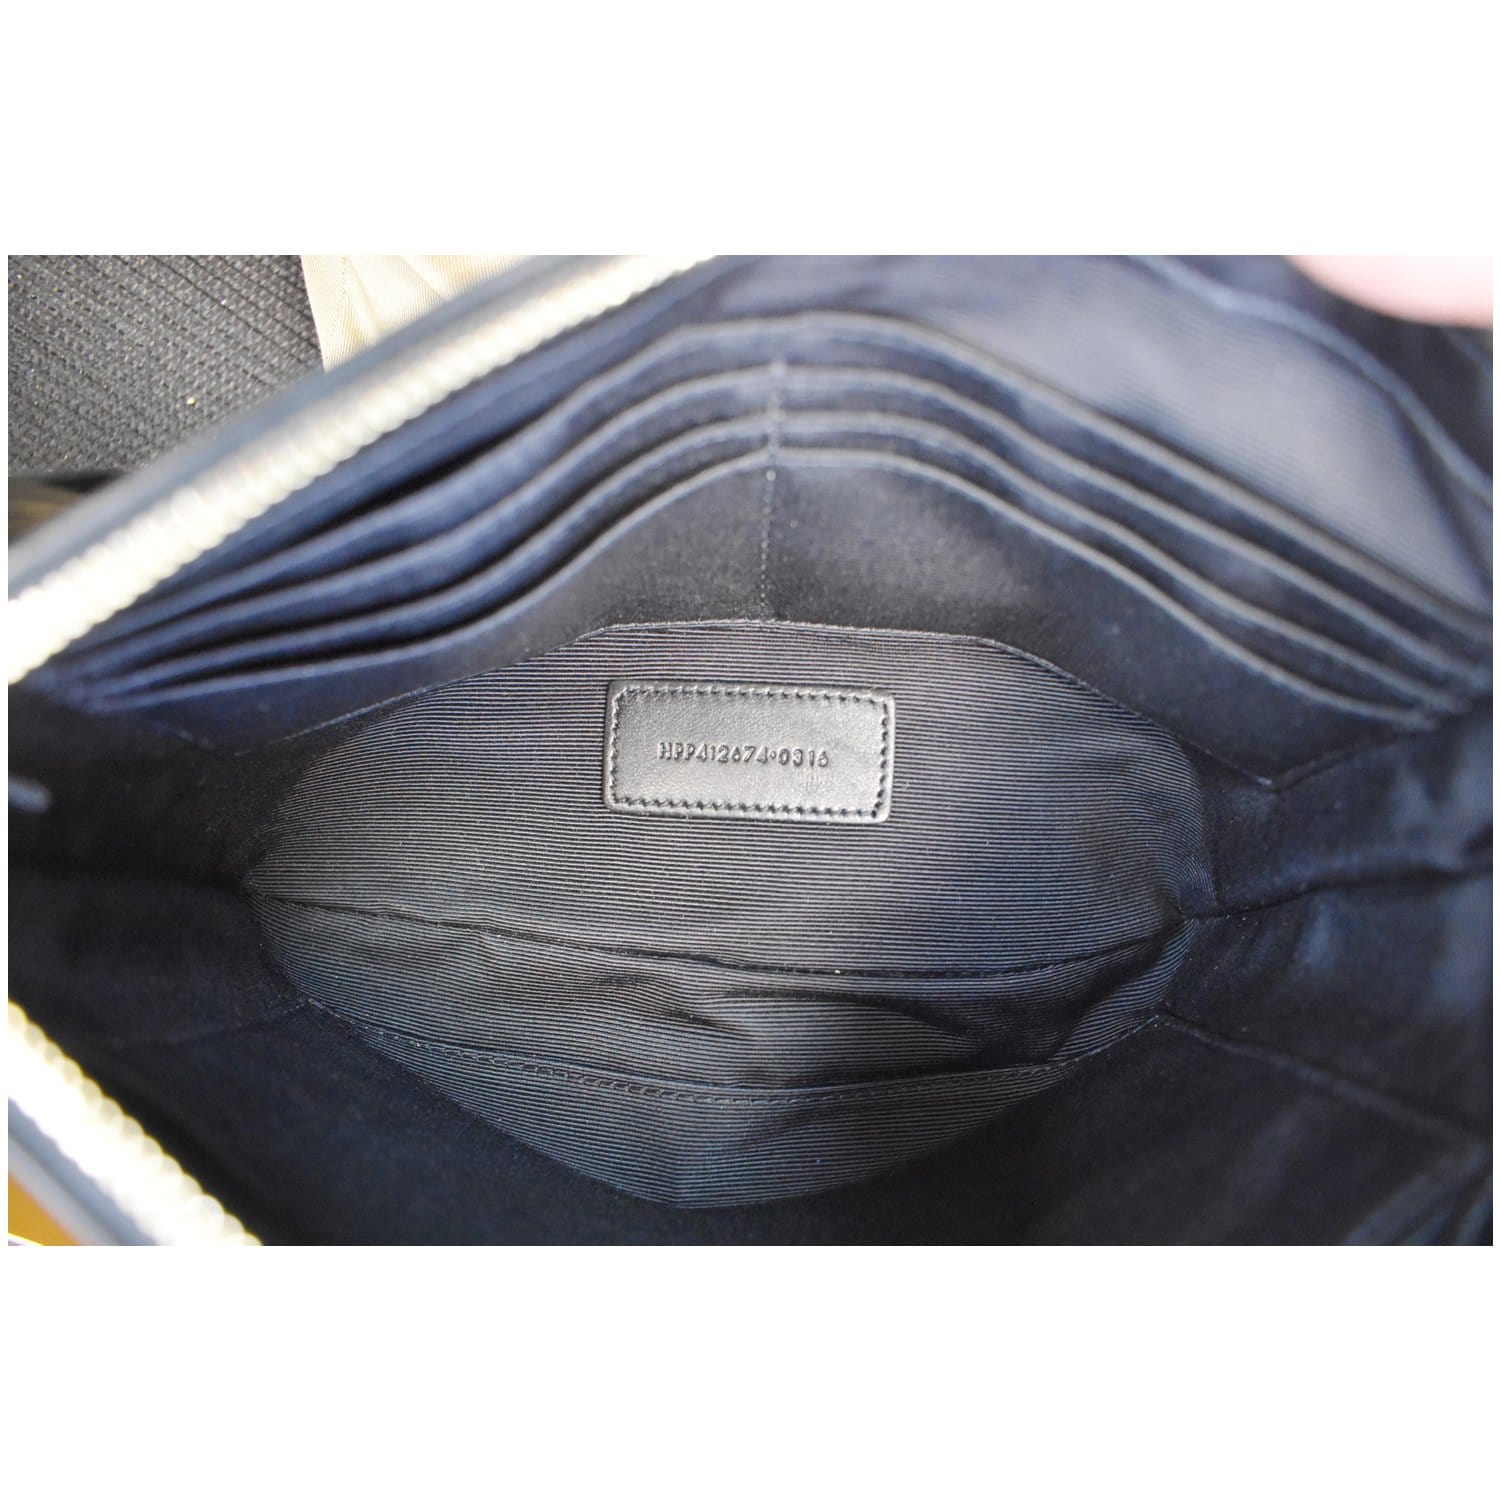 Saint Laurent Teen Monogram Crossbody Bag Leather at 1stDibs